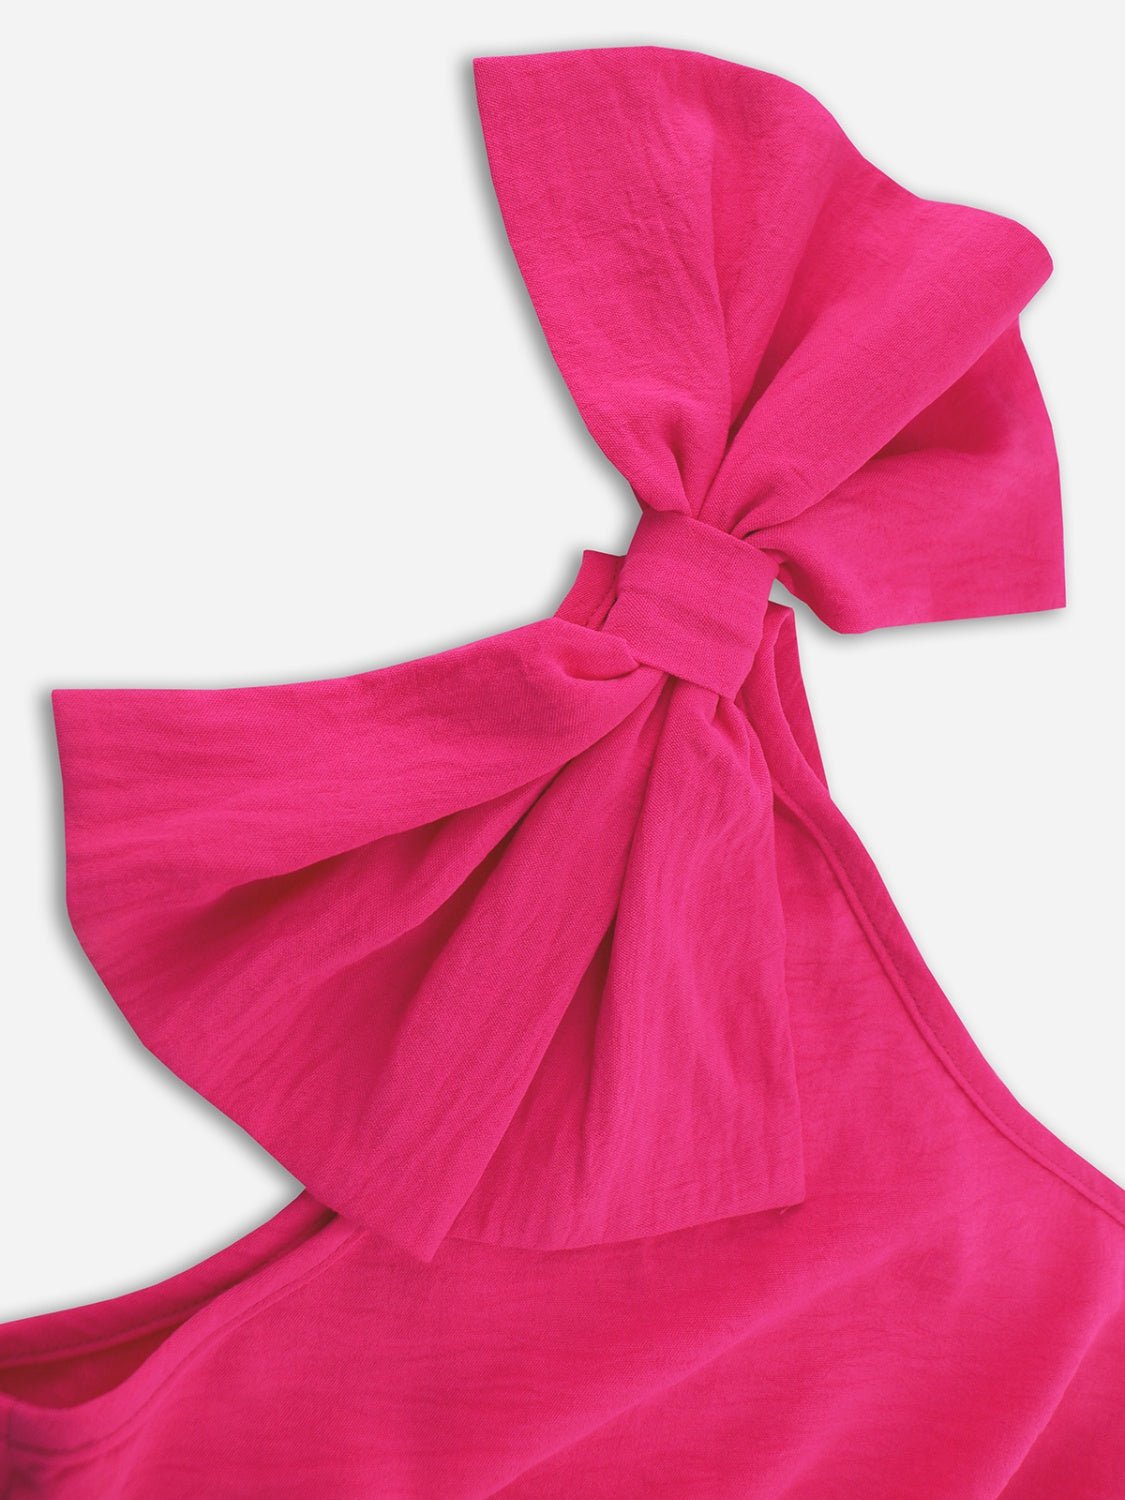 Bow Asymmetrical Neck Sleeveless Dress - OMG! Rose